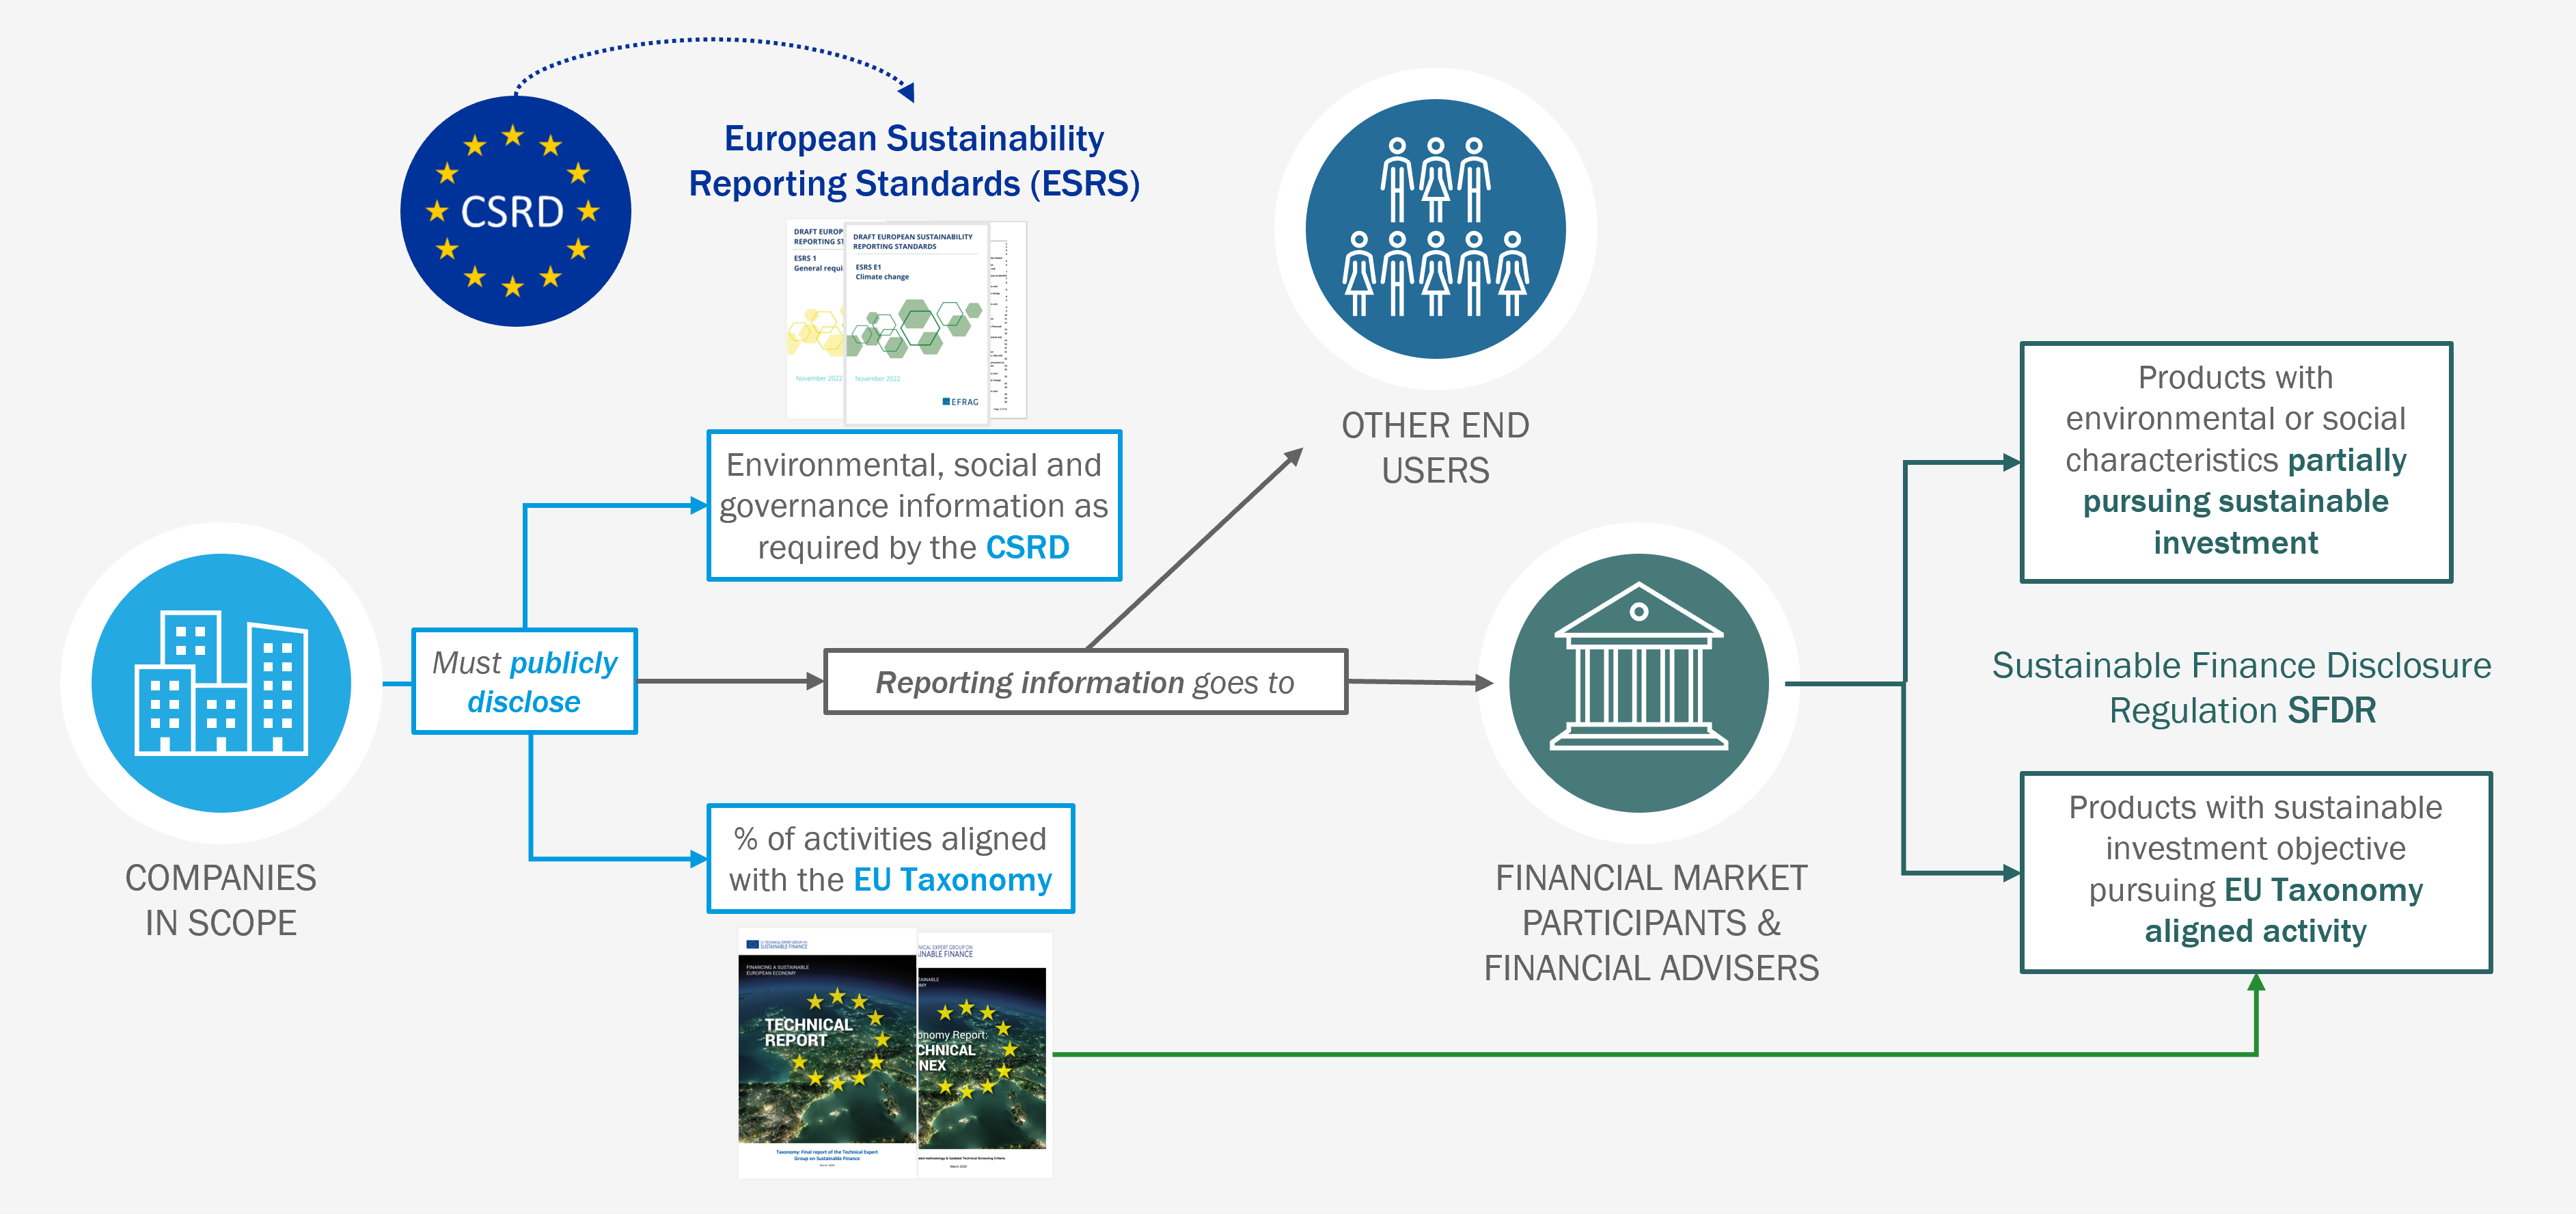 Interrelation of EU Taxonomy with other EU regulations